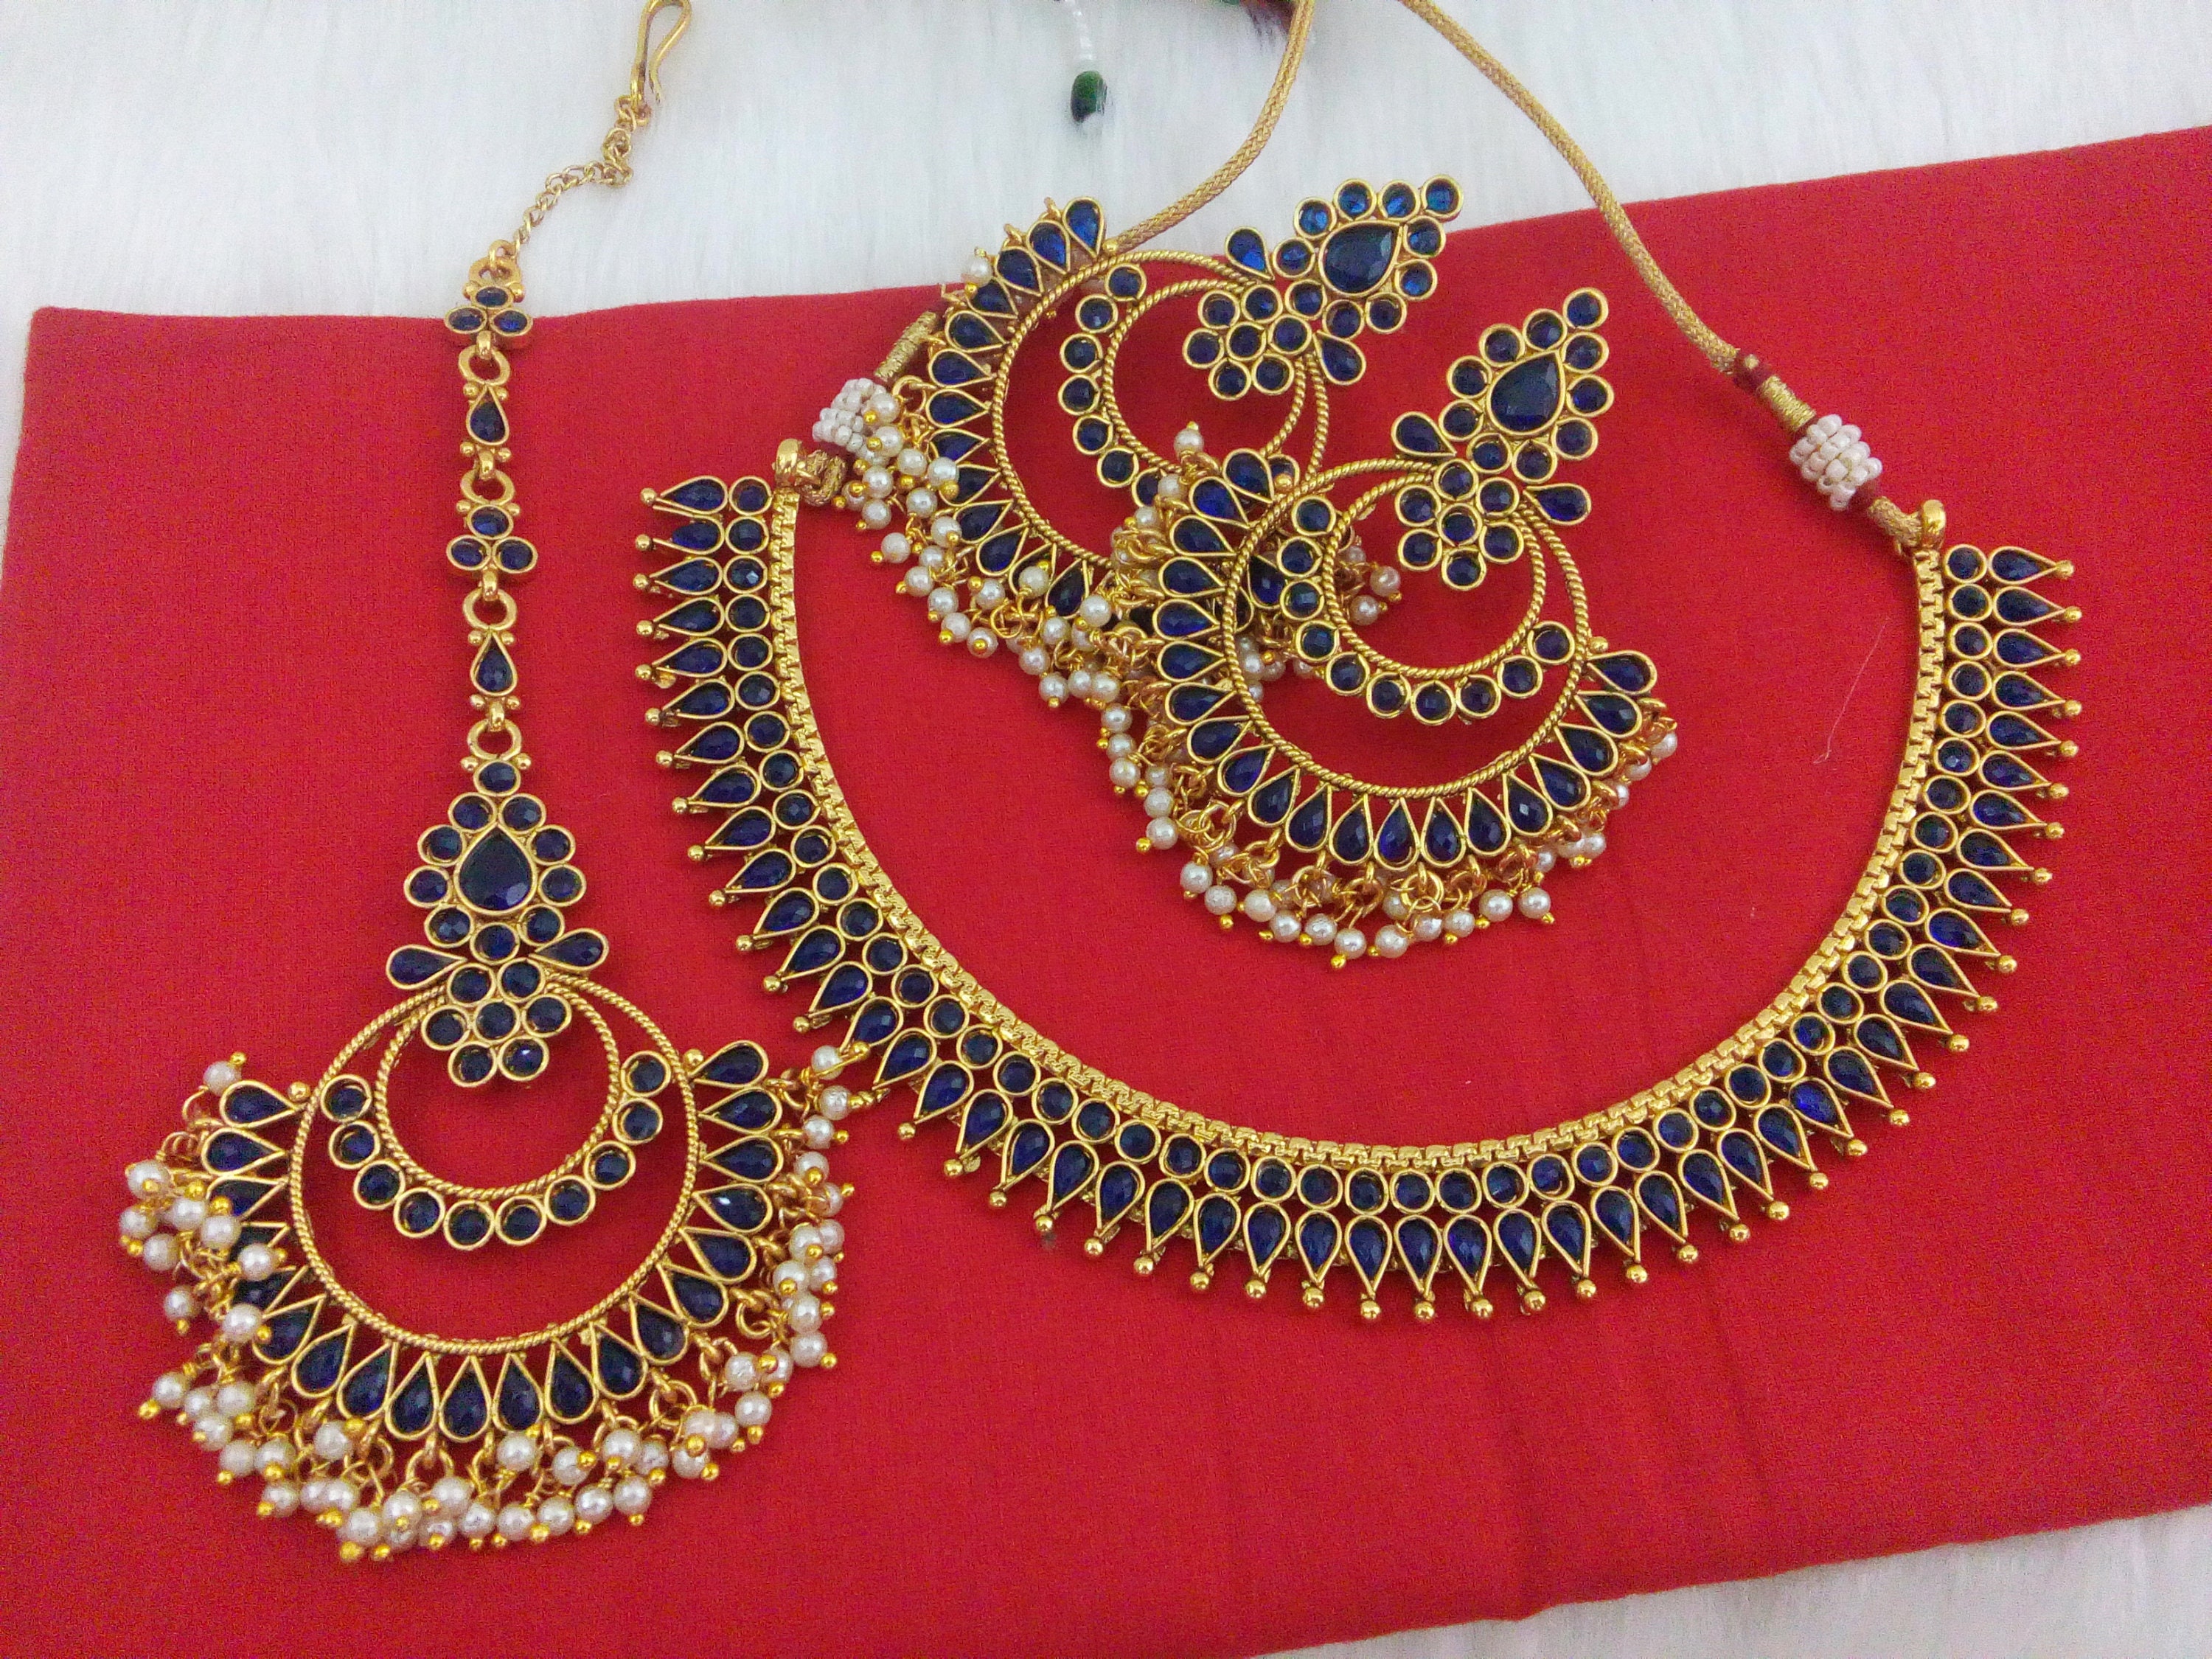 Indian Fashion Jewelry Ethnic Wedding Necklace Earring Tikka Set Gold Plated New